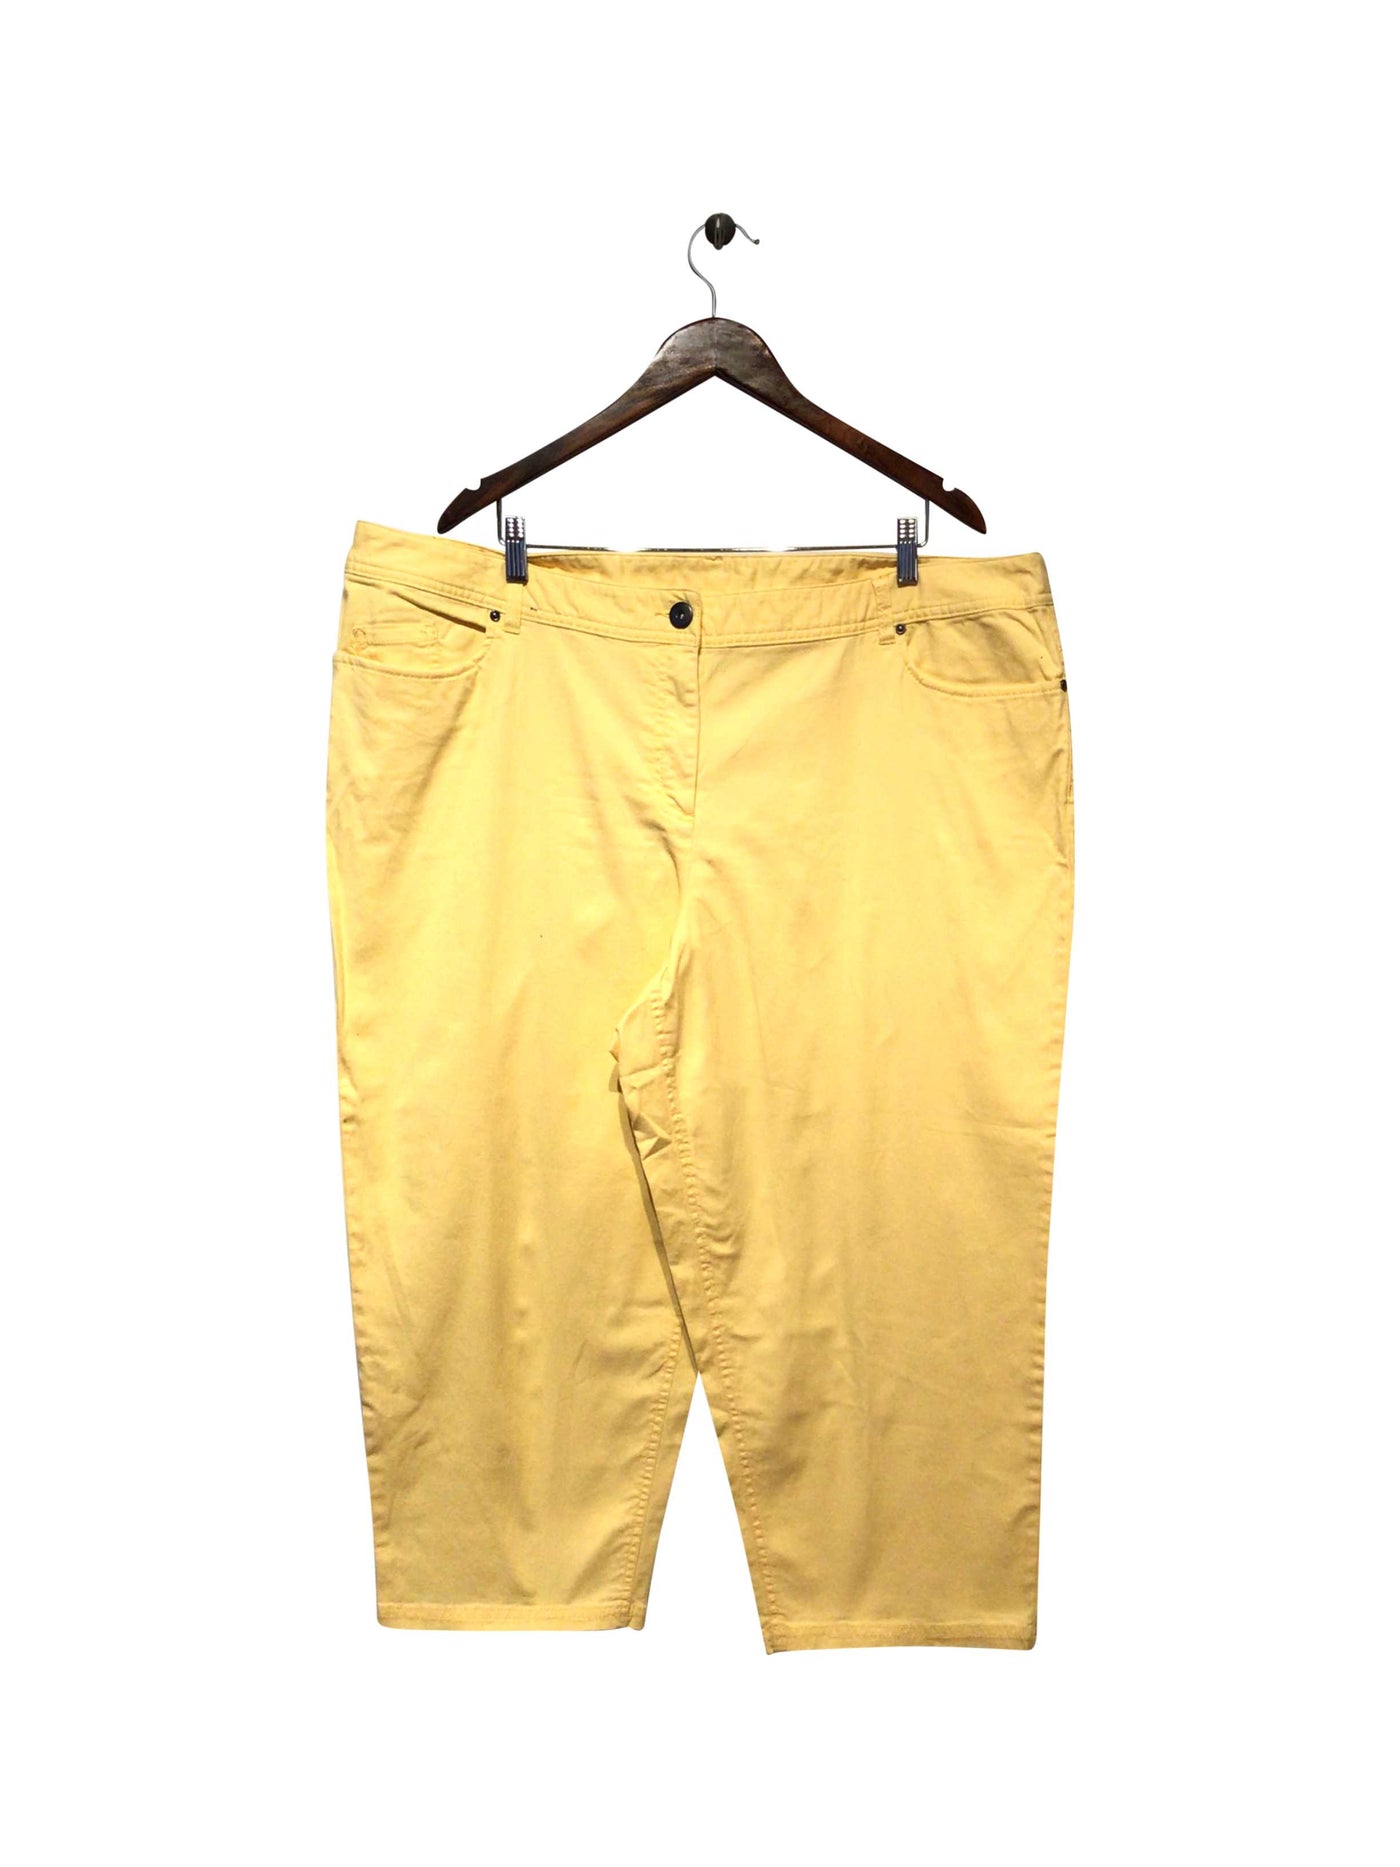 UNBRANDED Regular fit Pant Shorts in Yellow  -  22W  14.99 Koop